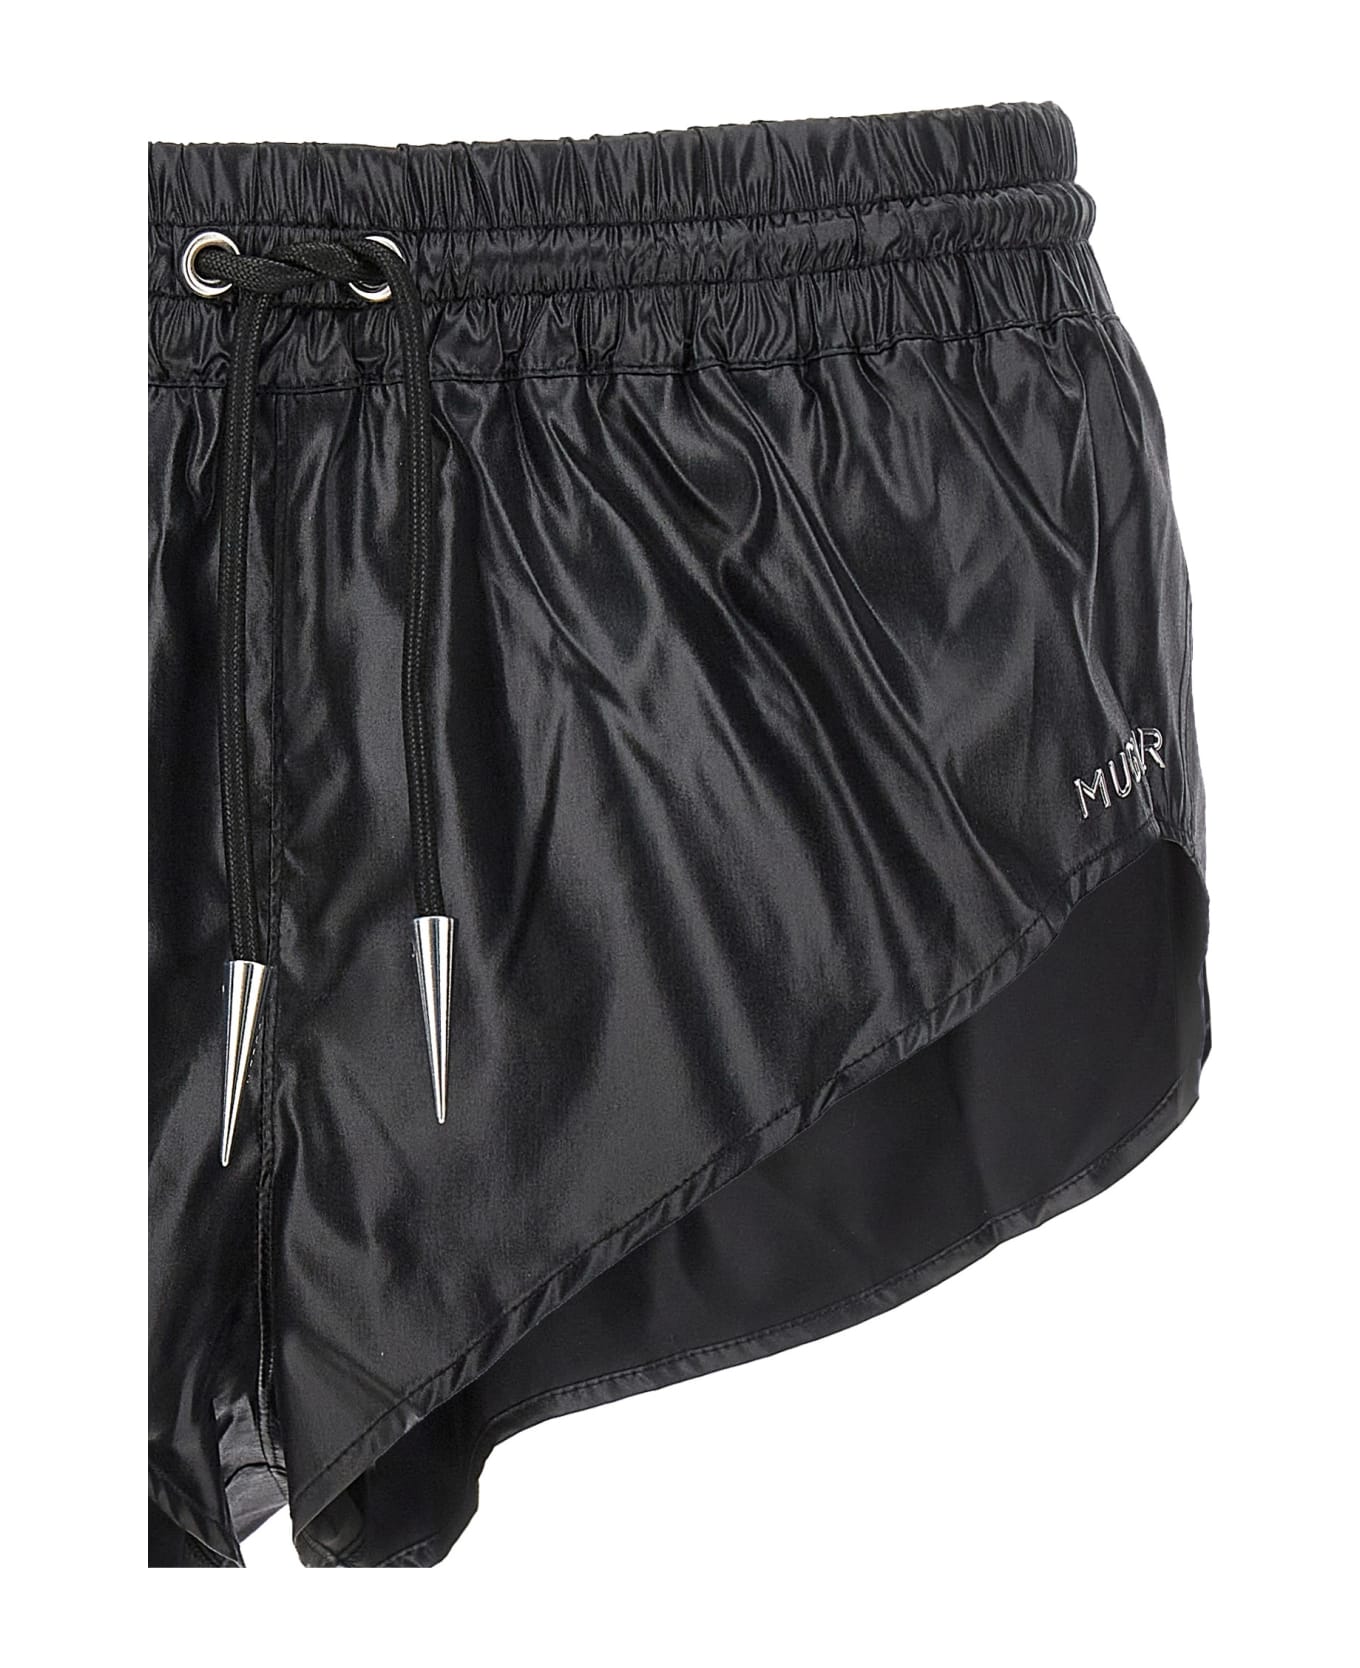 Mugler Shiny Effect Fabric Swimsuit Shorts - Black   ビーチタオル